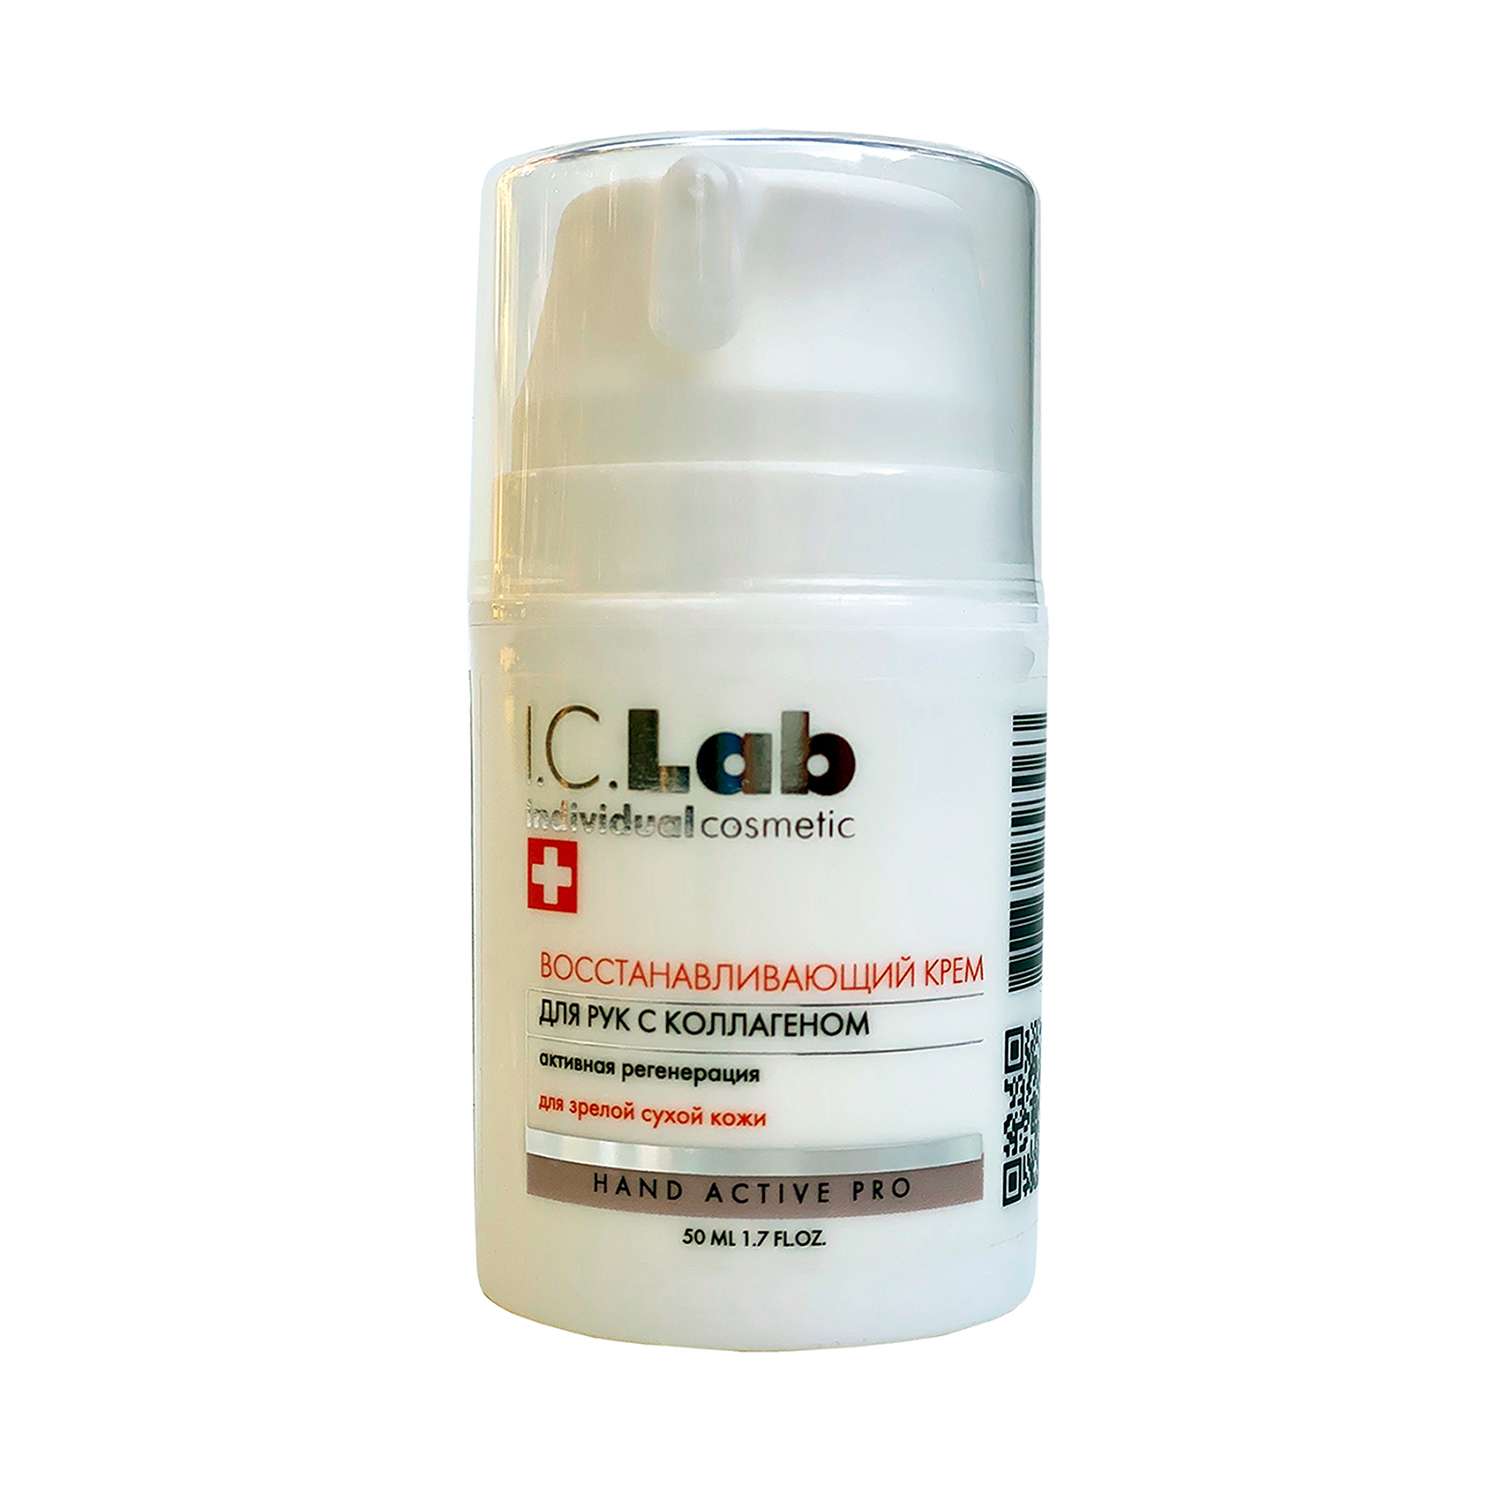 Крем для рук I.C.Lab Individual cosmetic Восстанавливающий с коллагеном 50 мл - фото 1